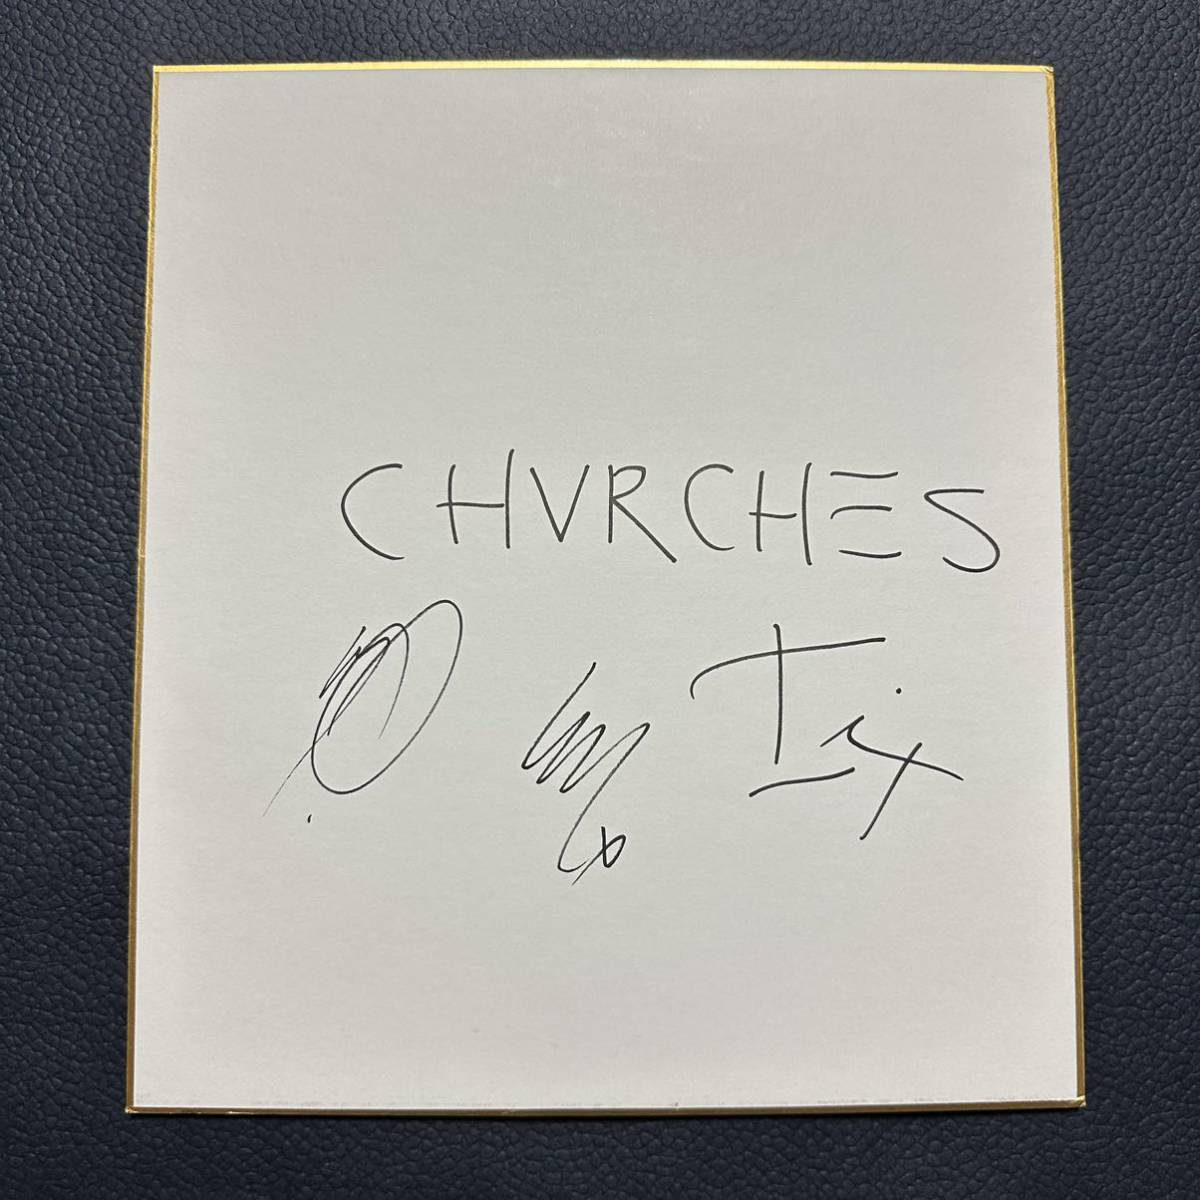 CHVRCHES ورق ملون موقع للكنائس موسيقى الروك ألبوم CD مانيسكين منسكين مارشميلو مارشميلو, سلع المواهب, لافتة